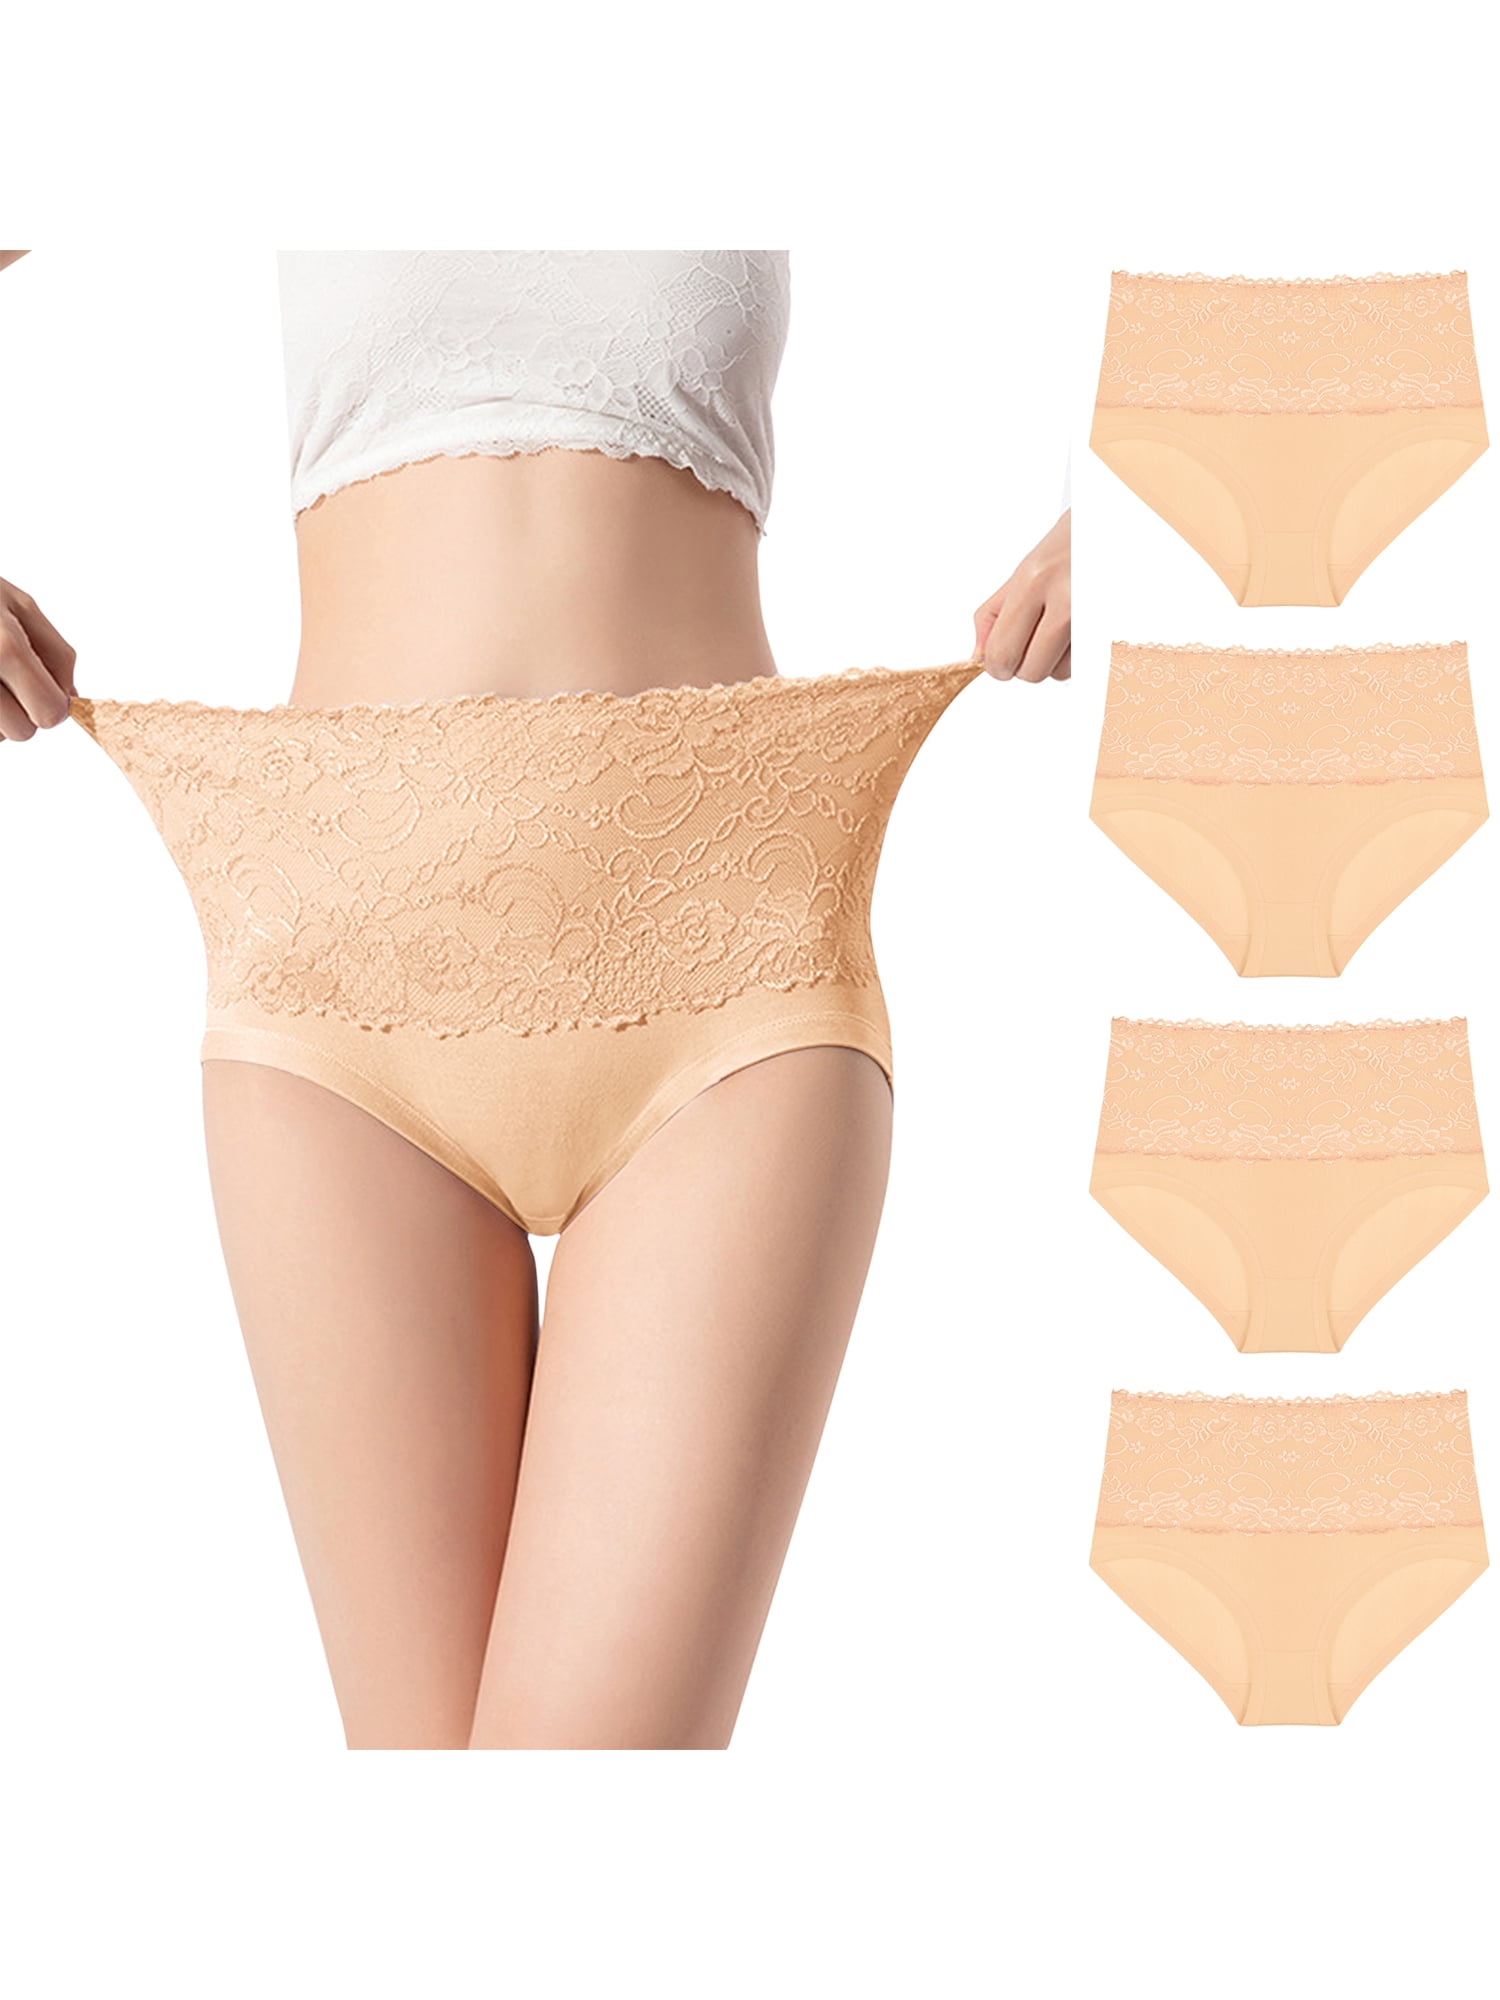 Plus Size Women's Underwear Products - Bargains Group